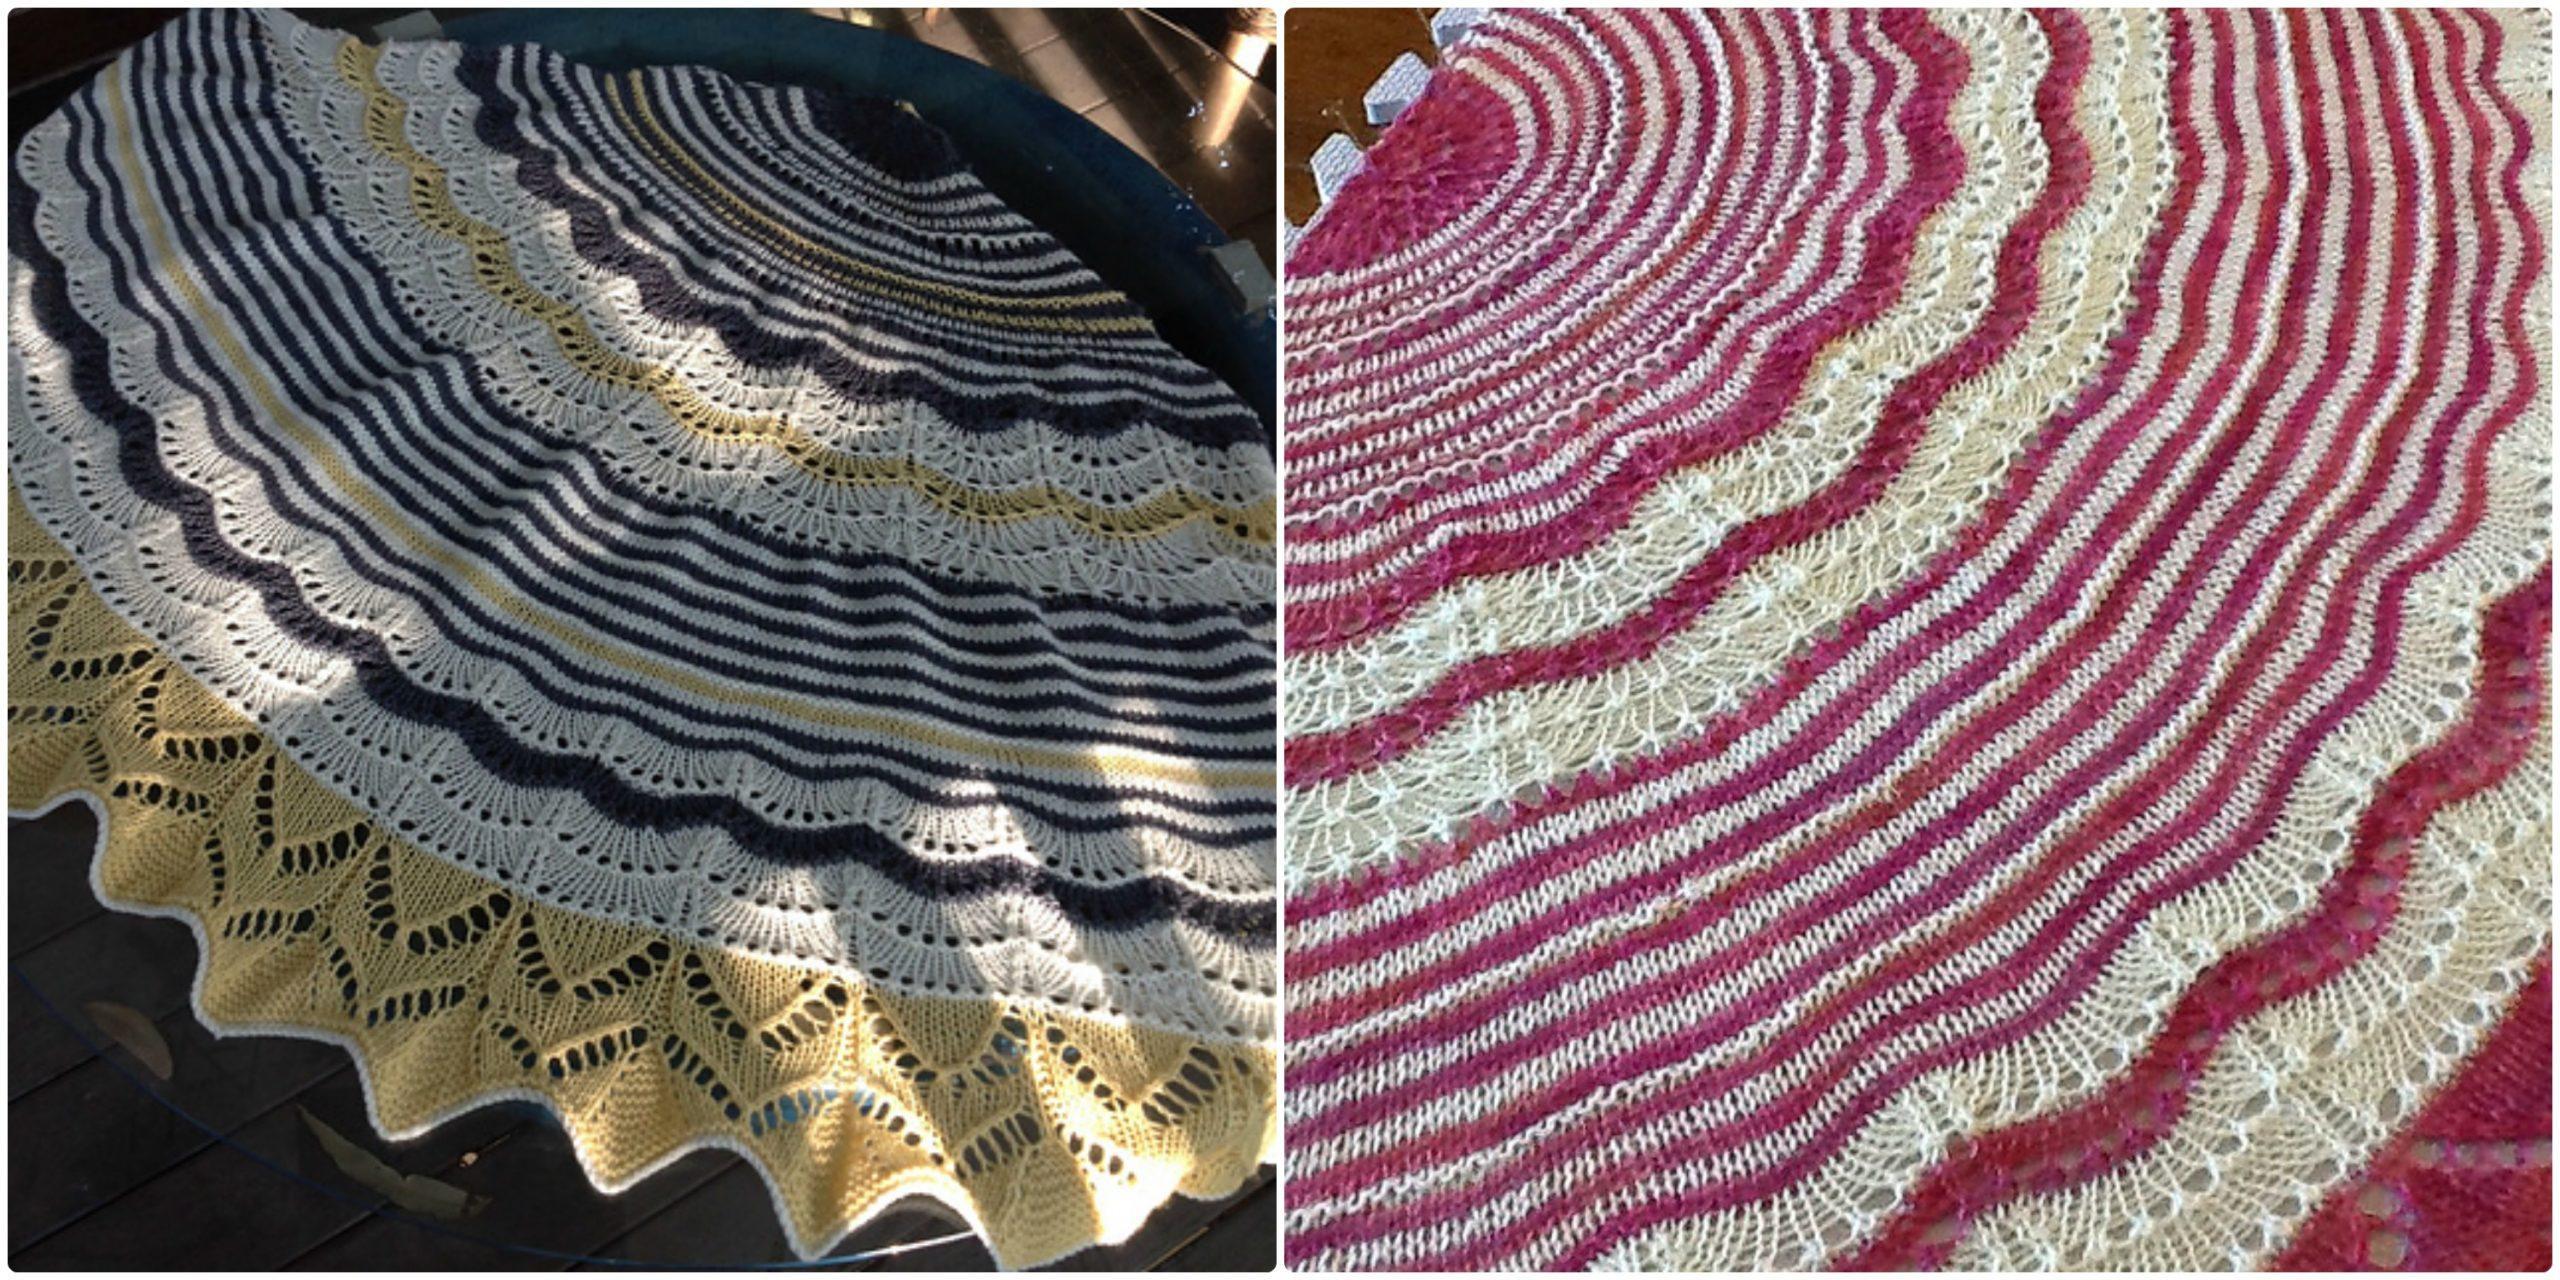 Colourful handknit shawls